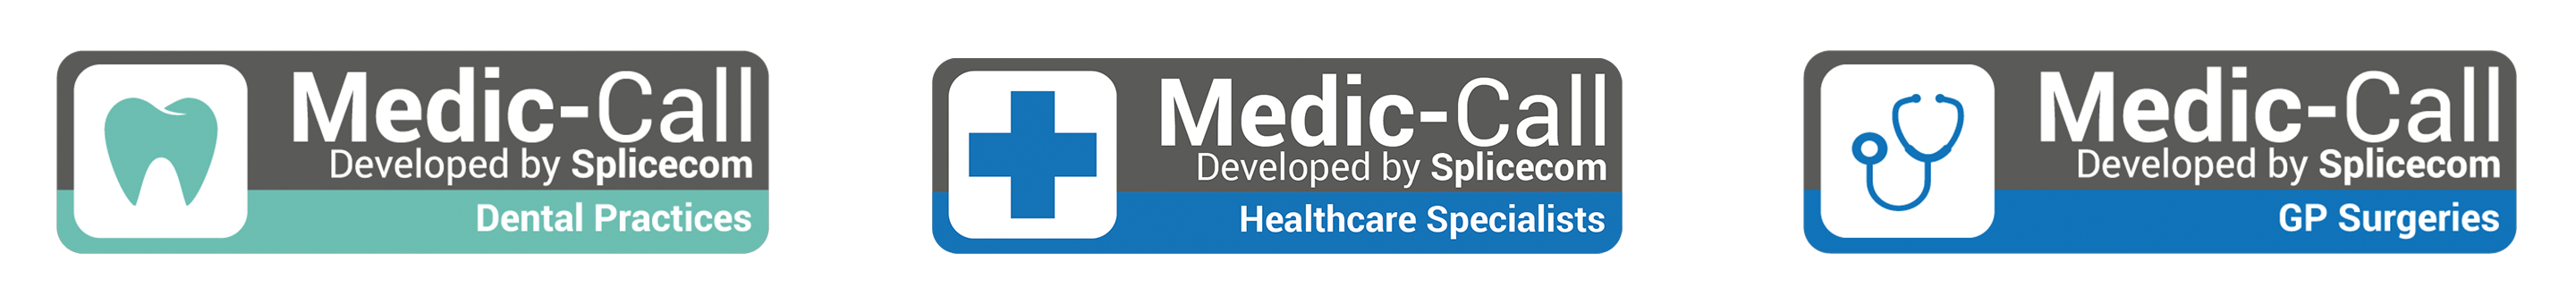 Midas Medicall Banner